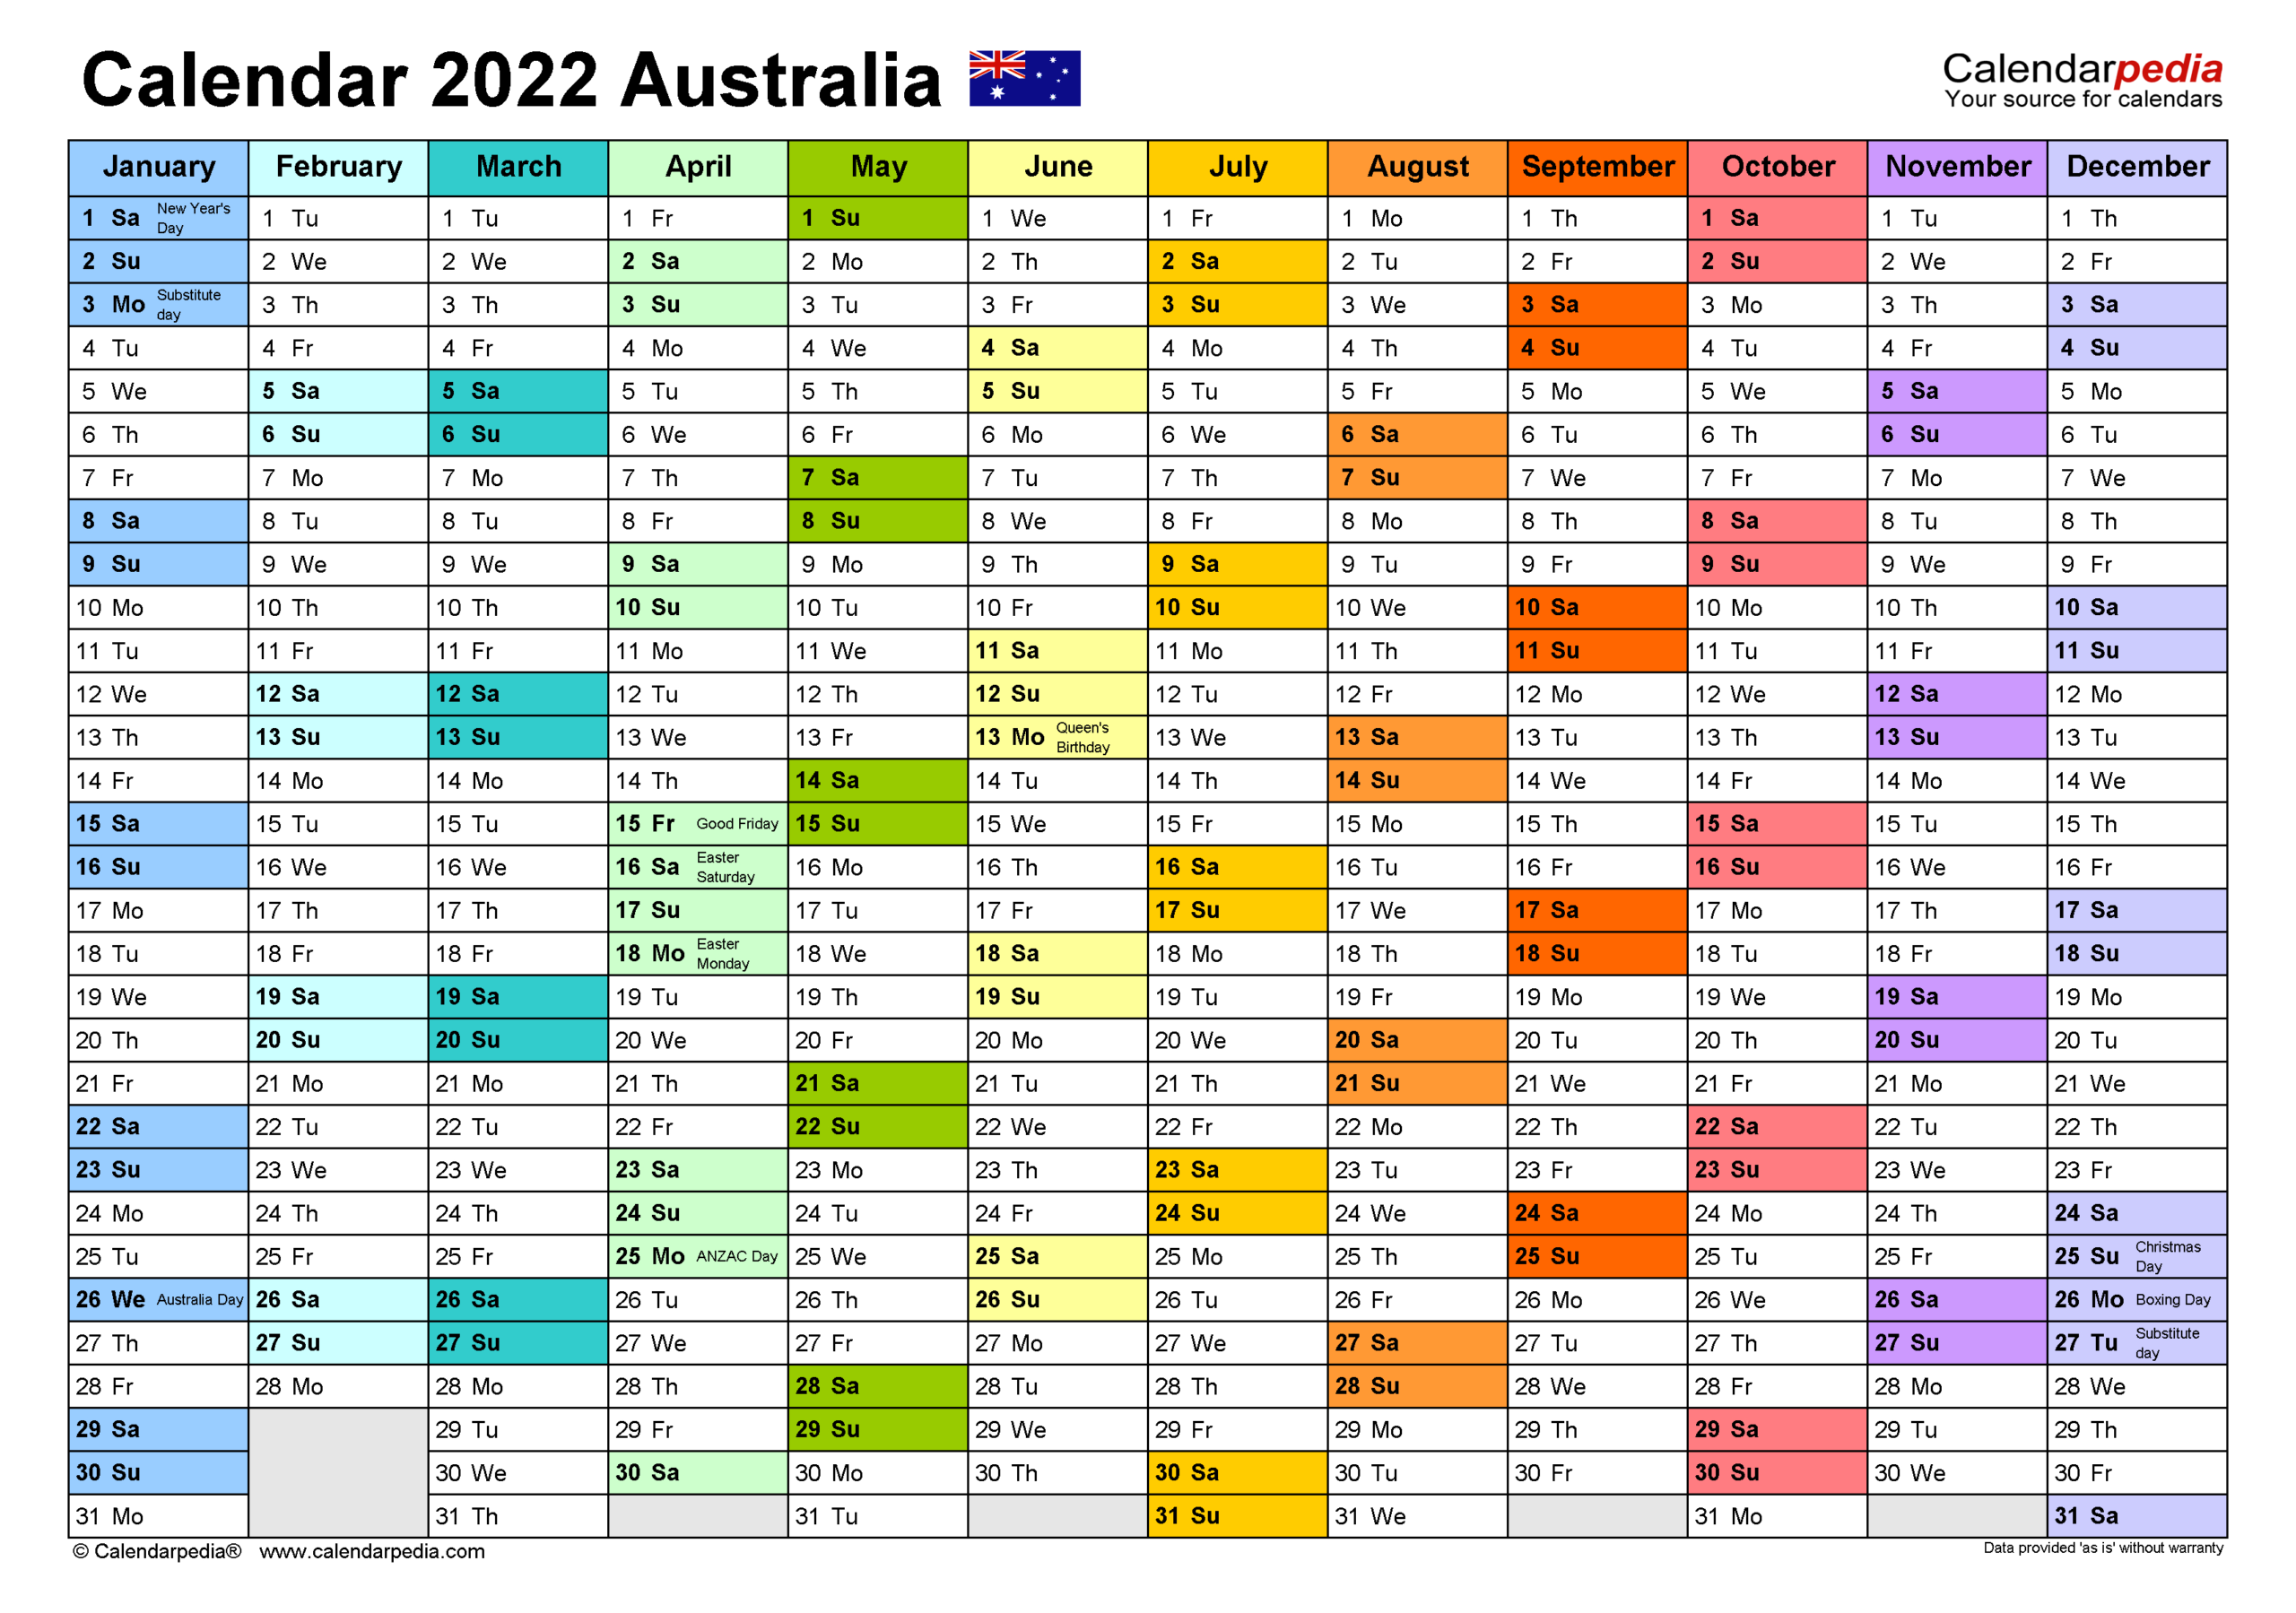 Easter 2022 Dates Australia - Nexta